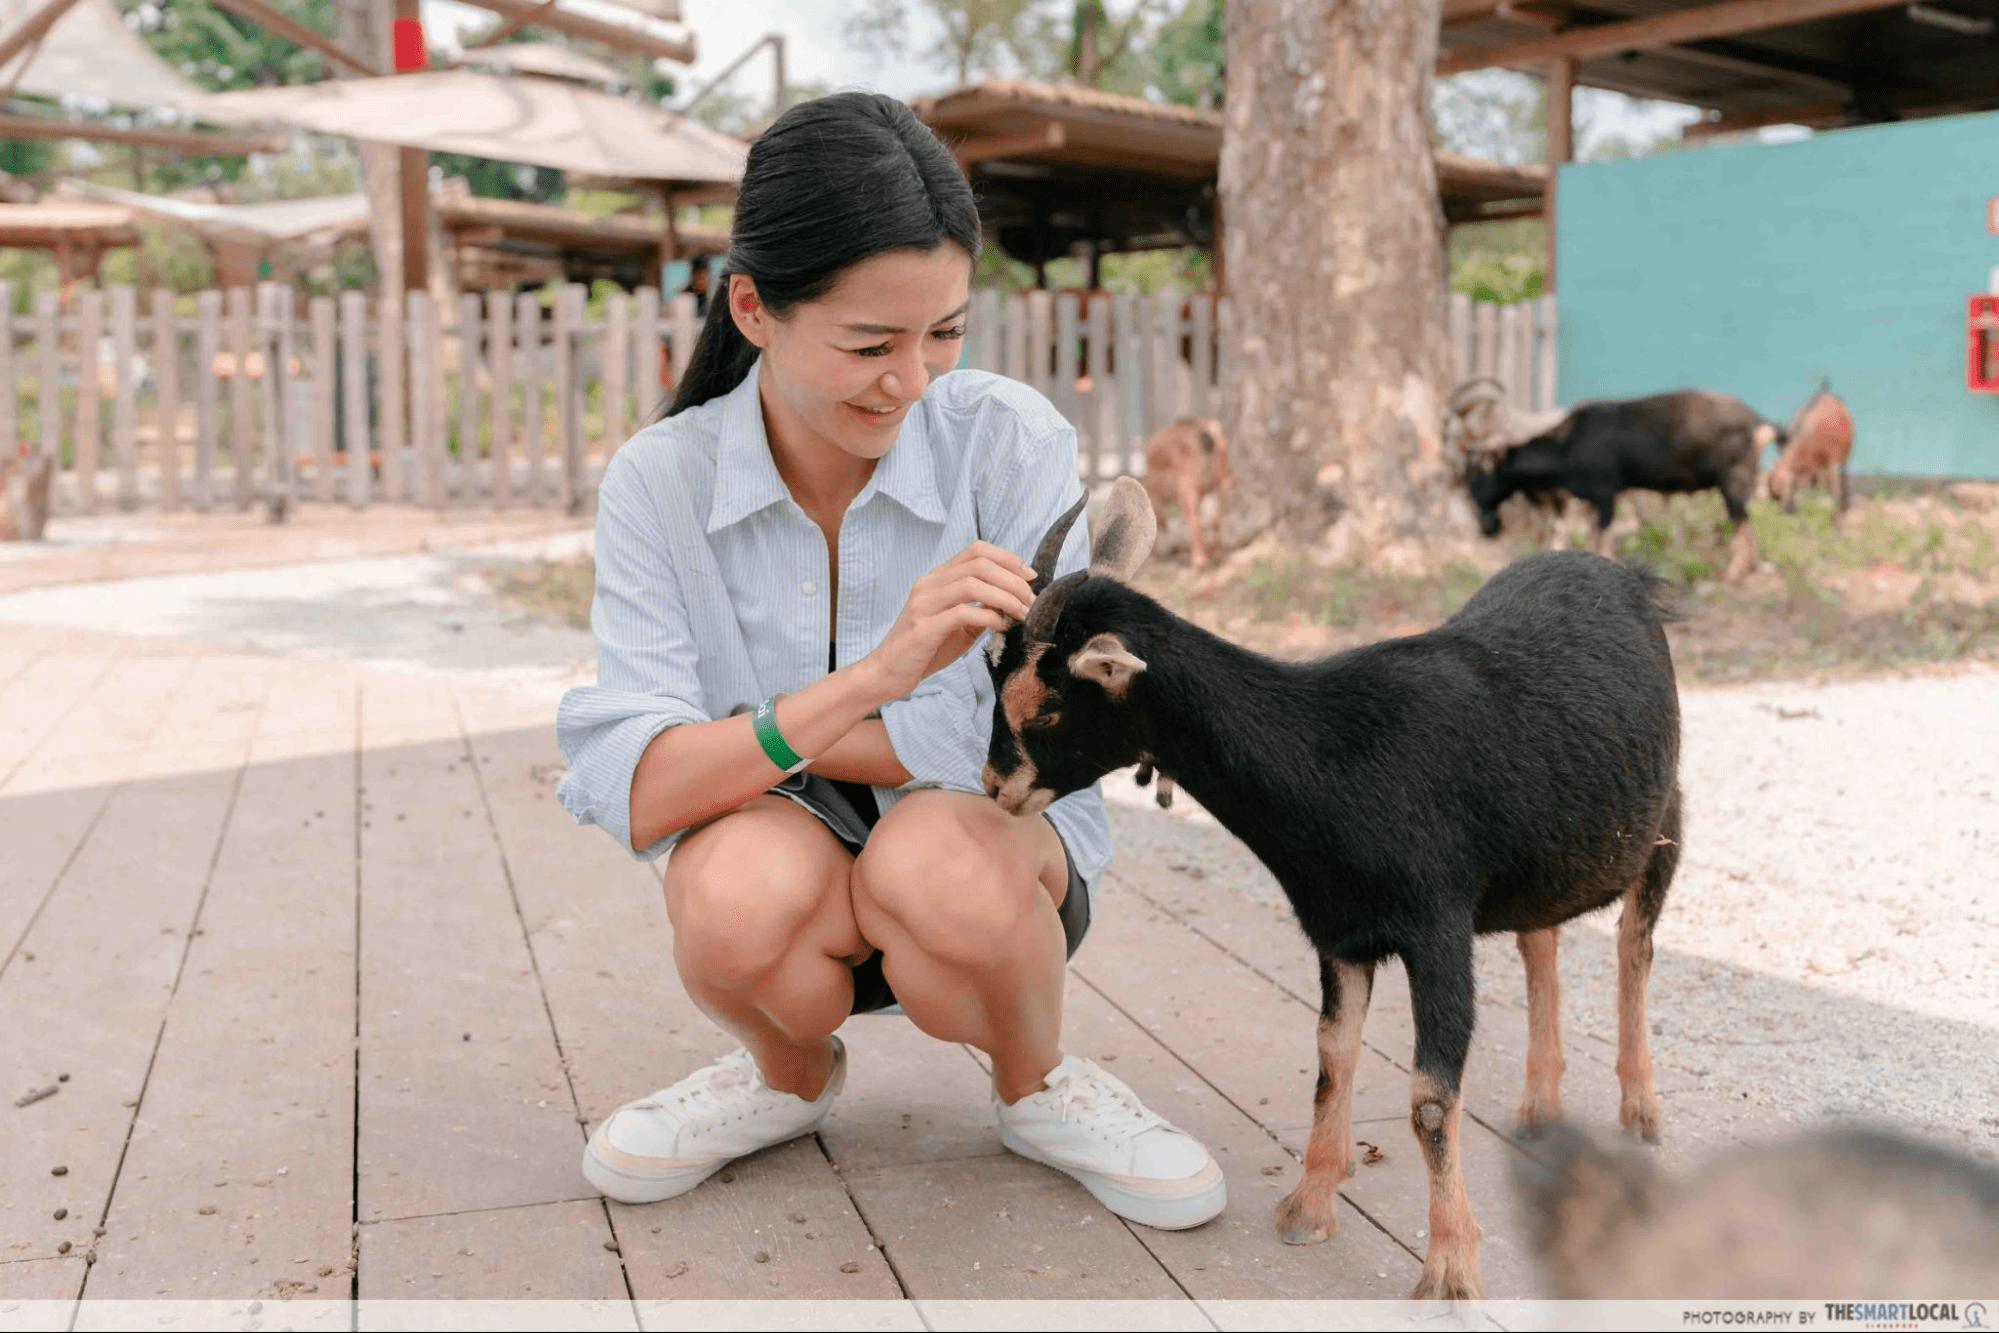 Things to do November - KidzWorld Roaming Goats